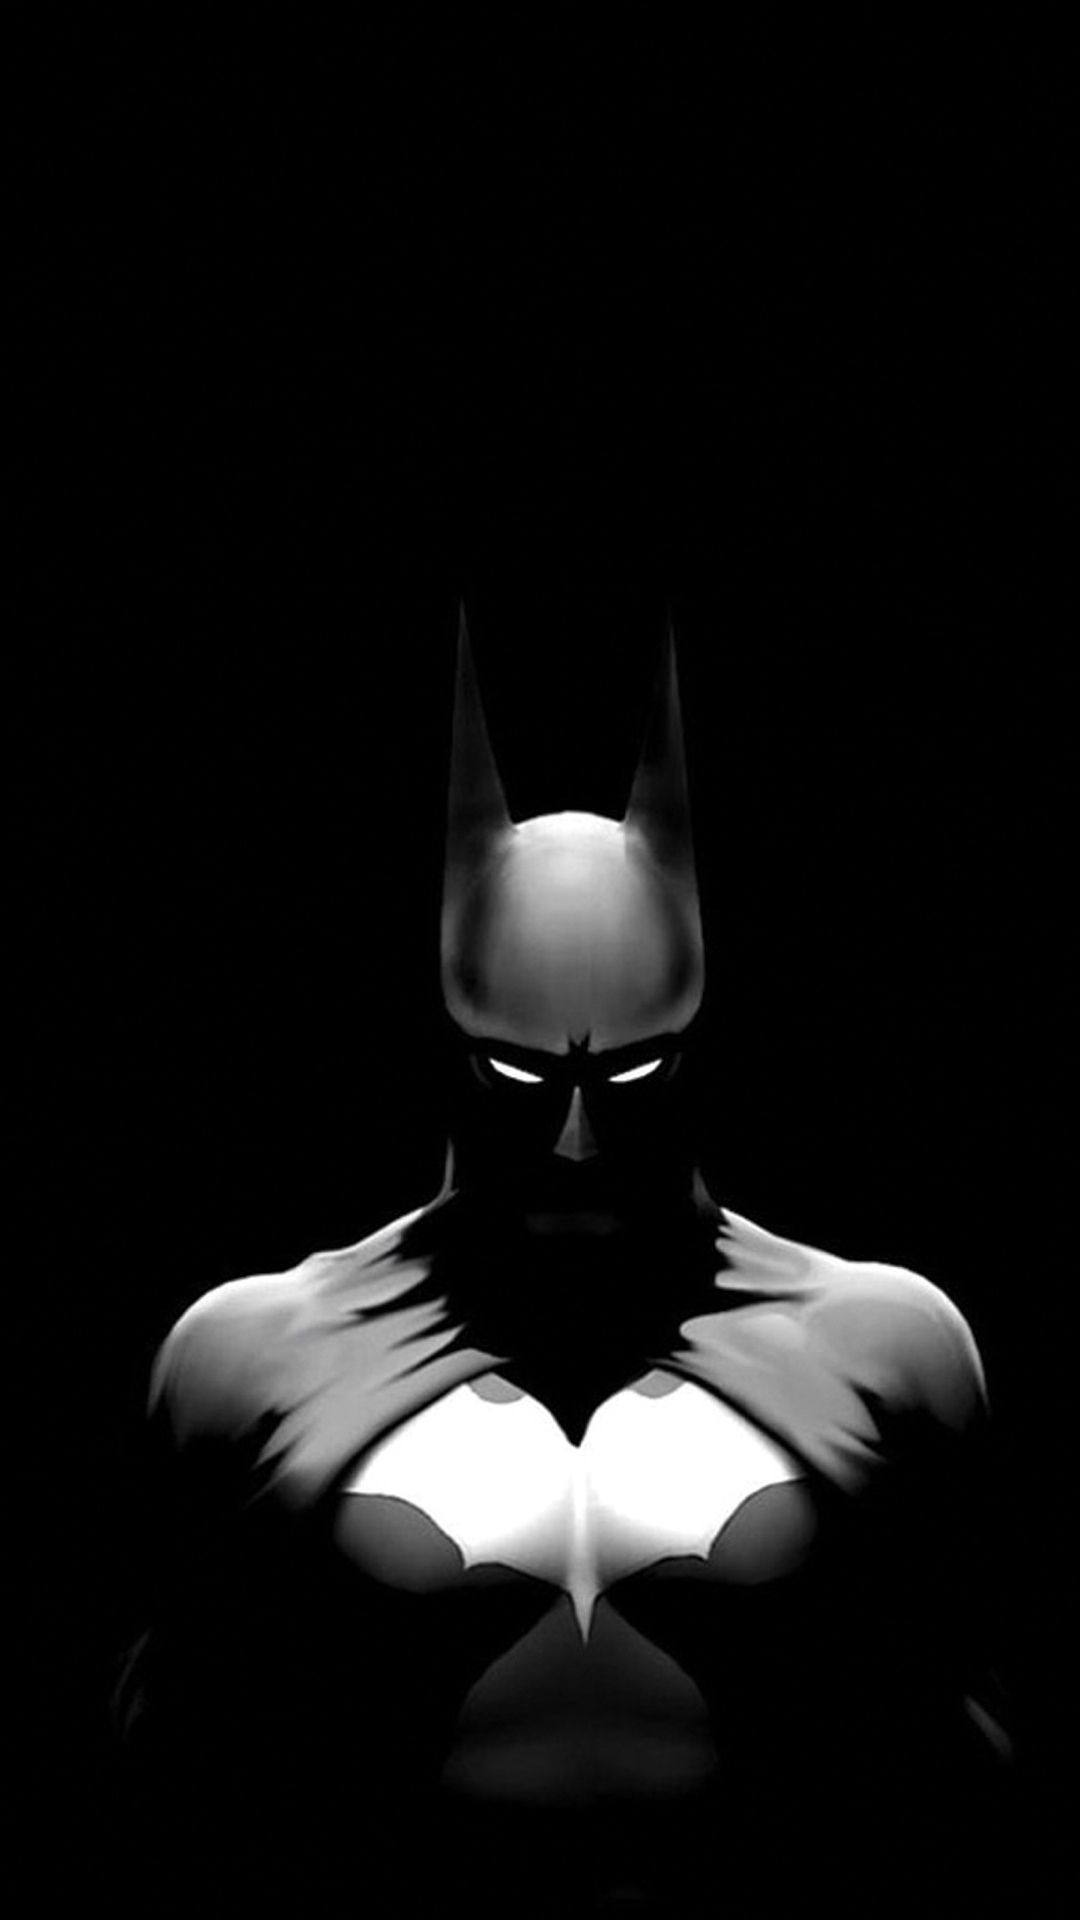 s7エッジ壁紙hd,バットマン,静物写真,闇,架空の人物,スーパーヒーロー